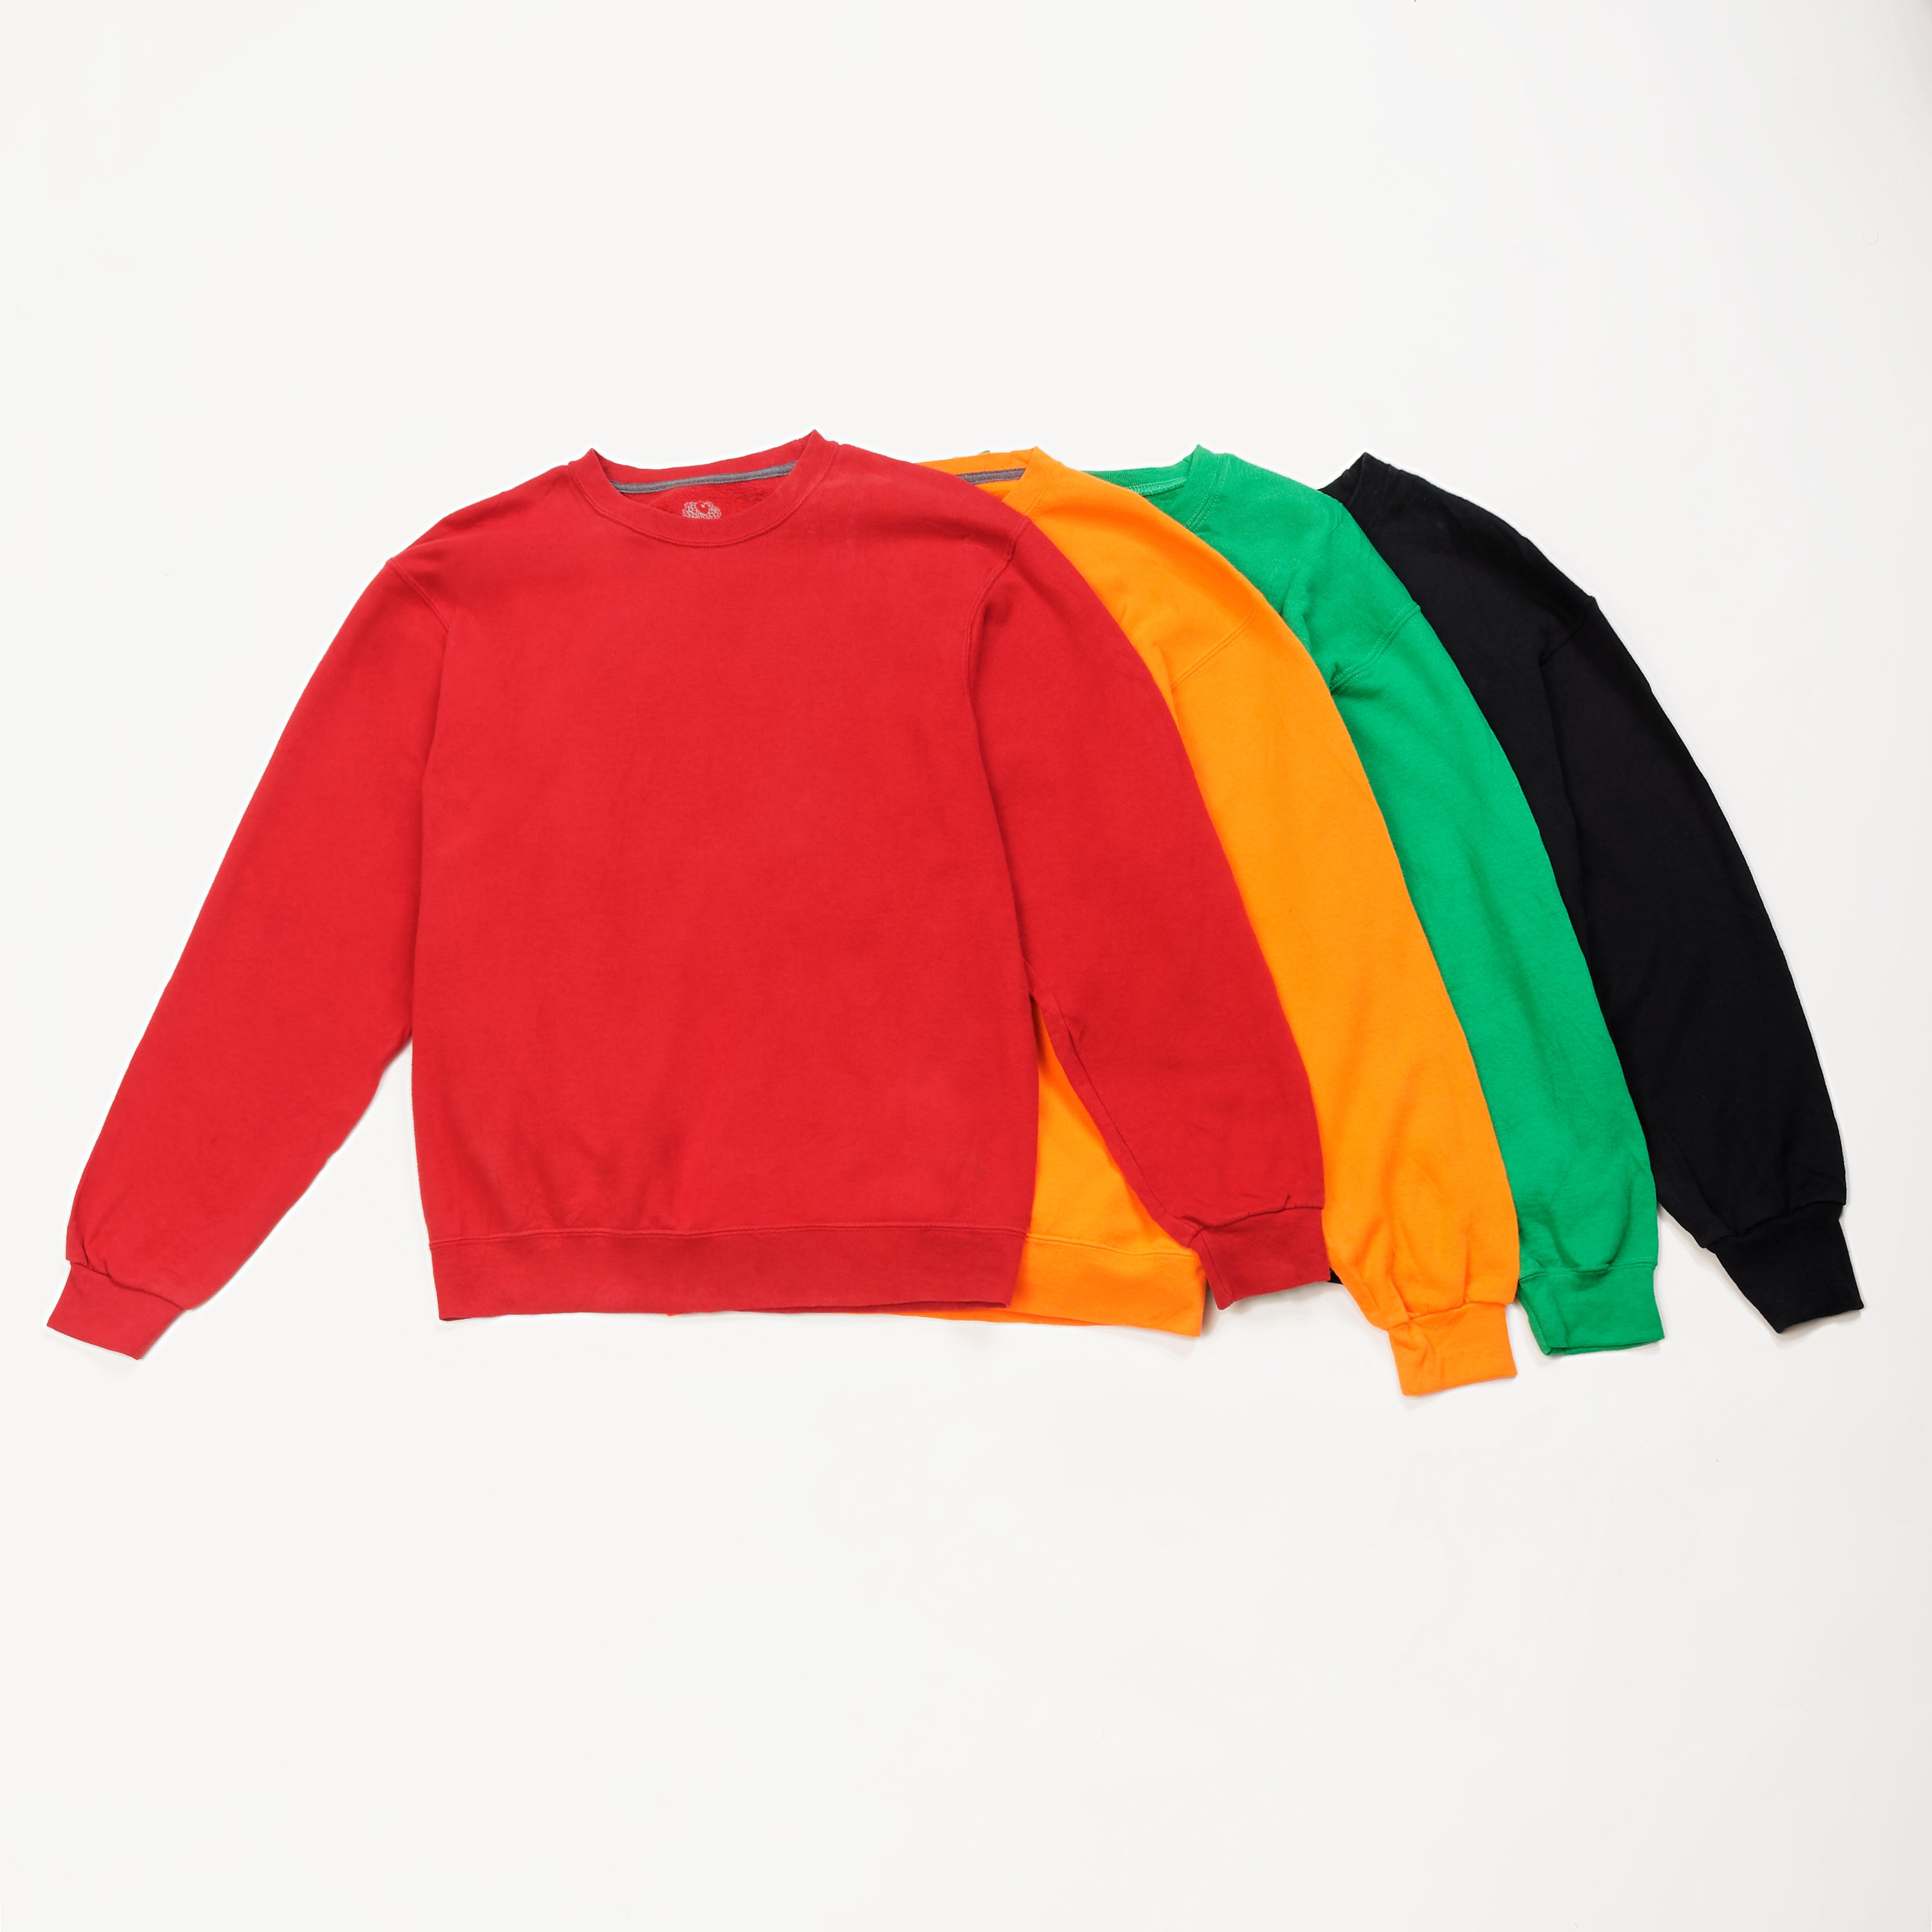 Preloved Solid Crewneck Sweatshirts | Set of 4